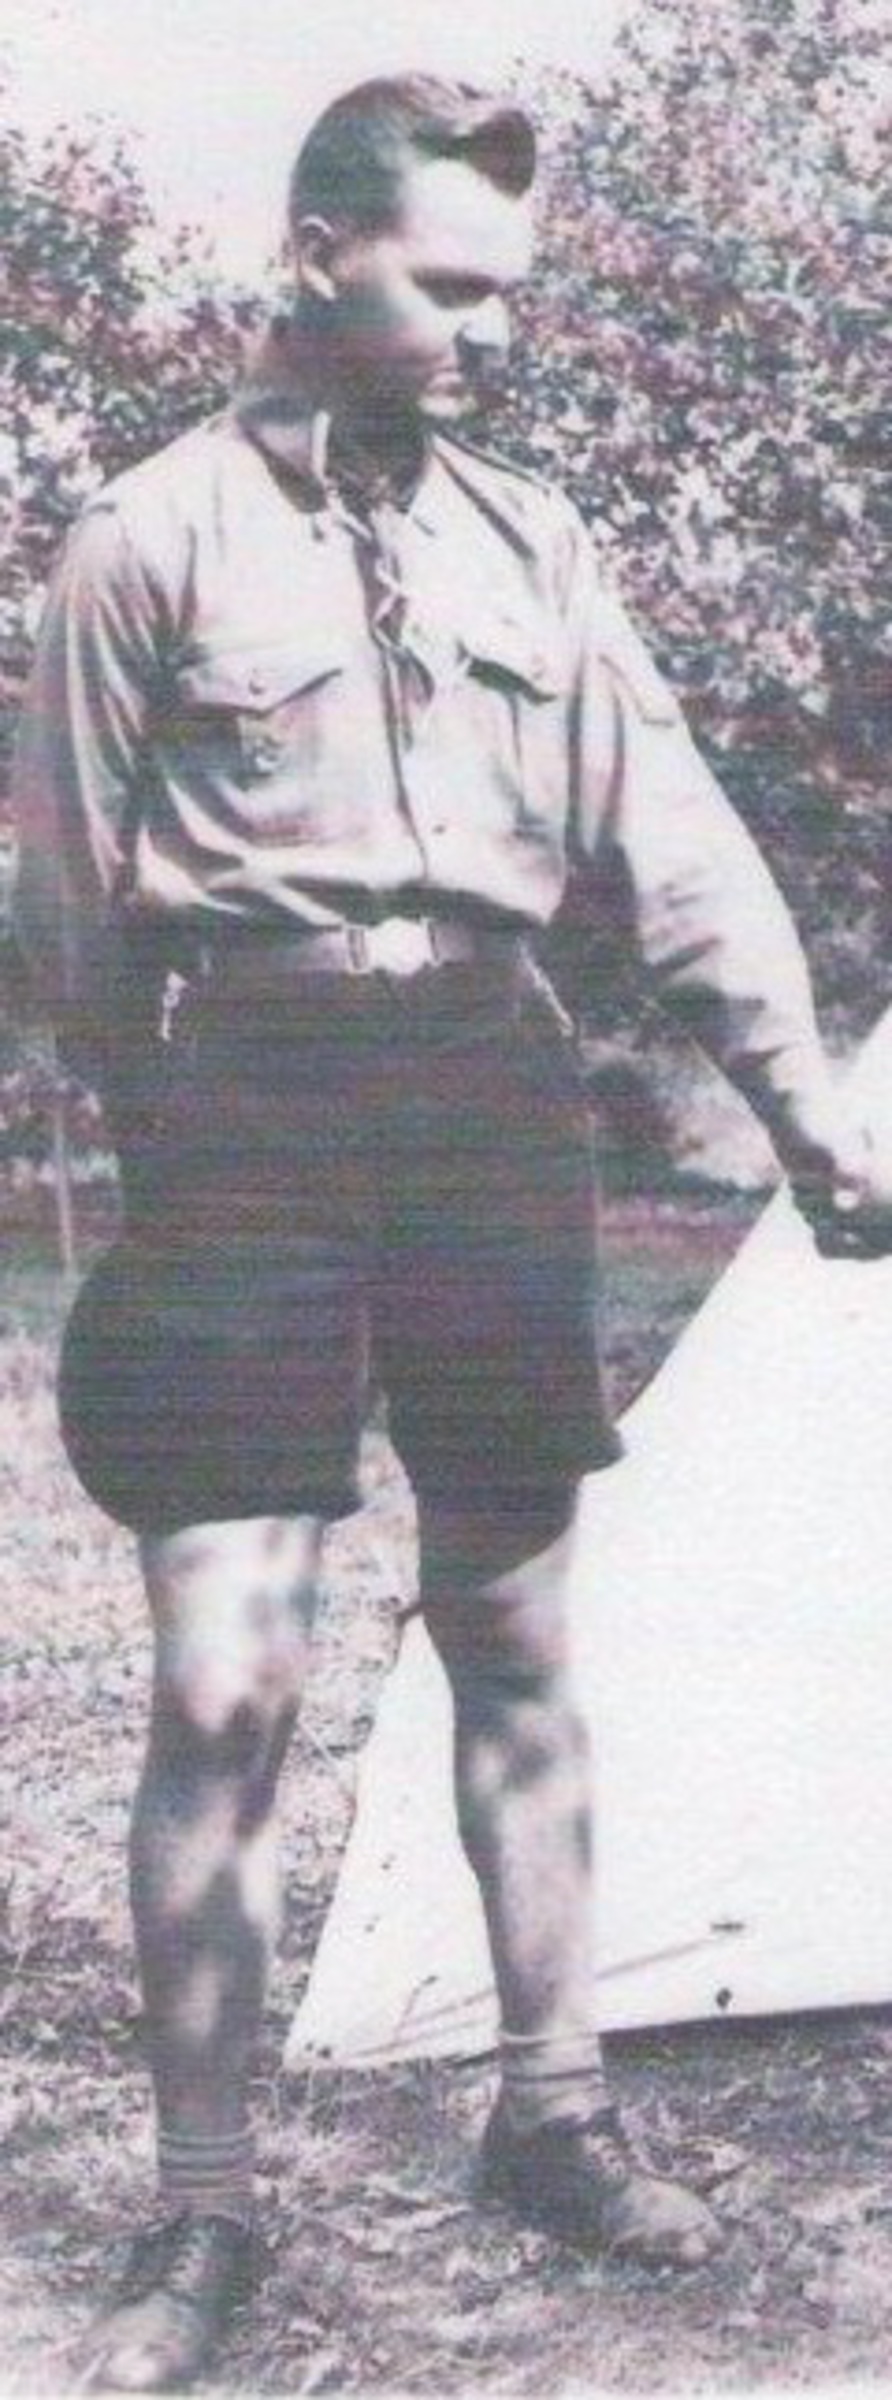 Oldrich Kafunek at World Scout Jamboree in 1947